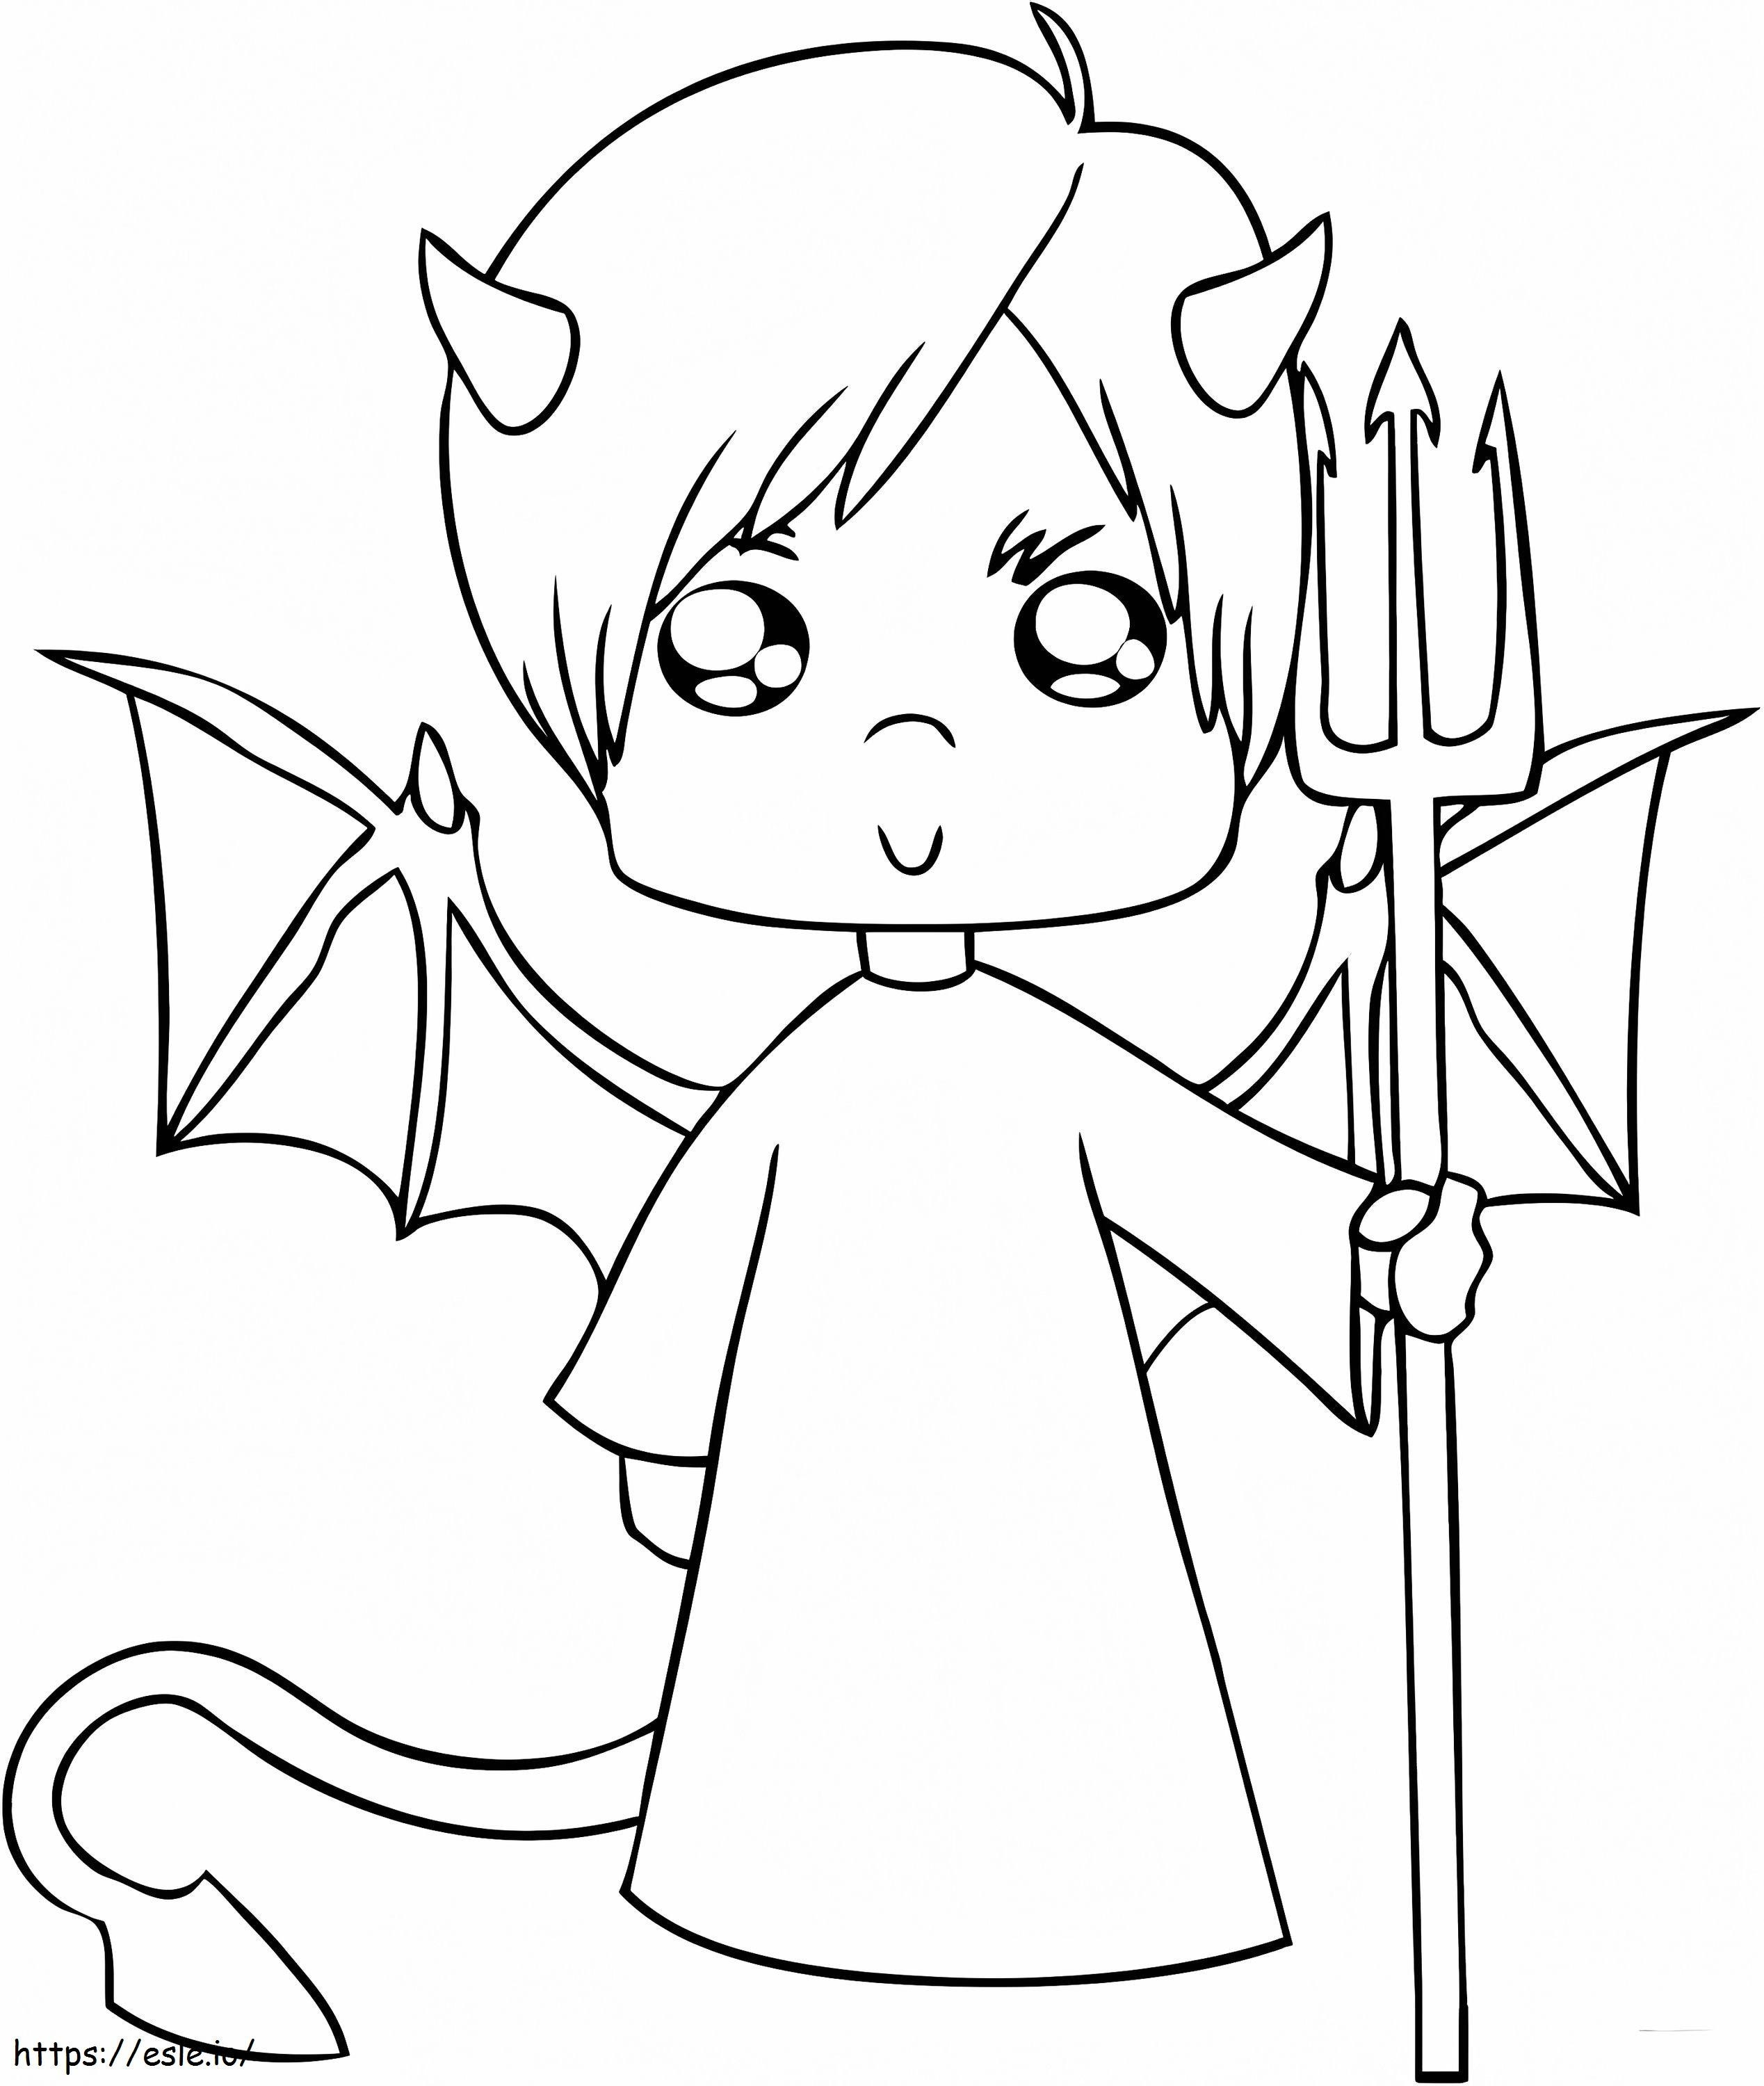 1545787726 Cute Devil 728X861 1 coloring page